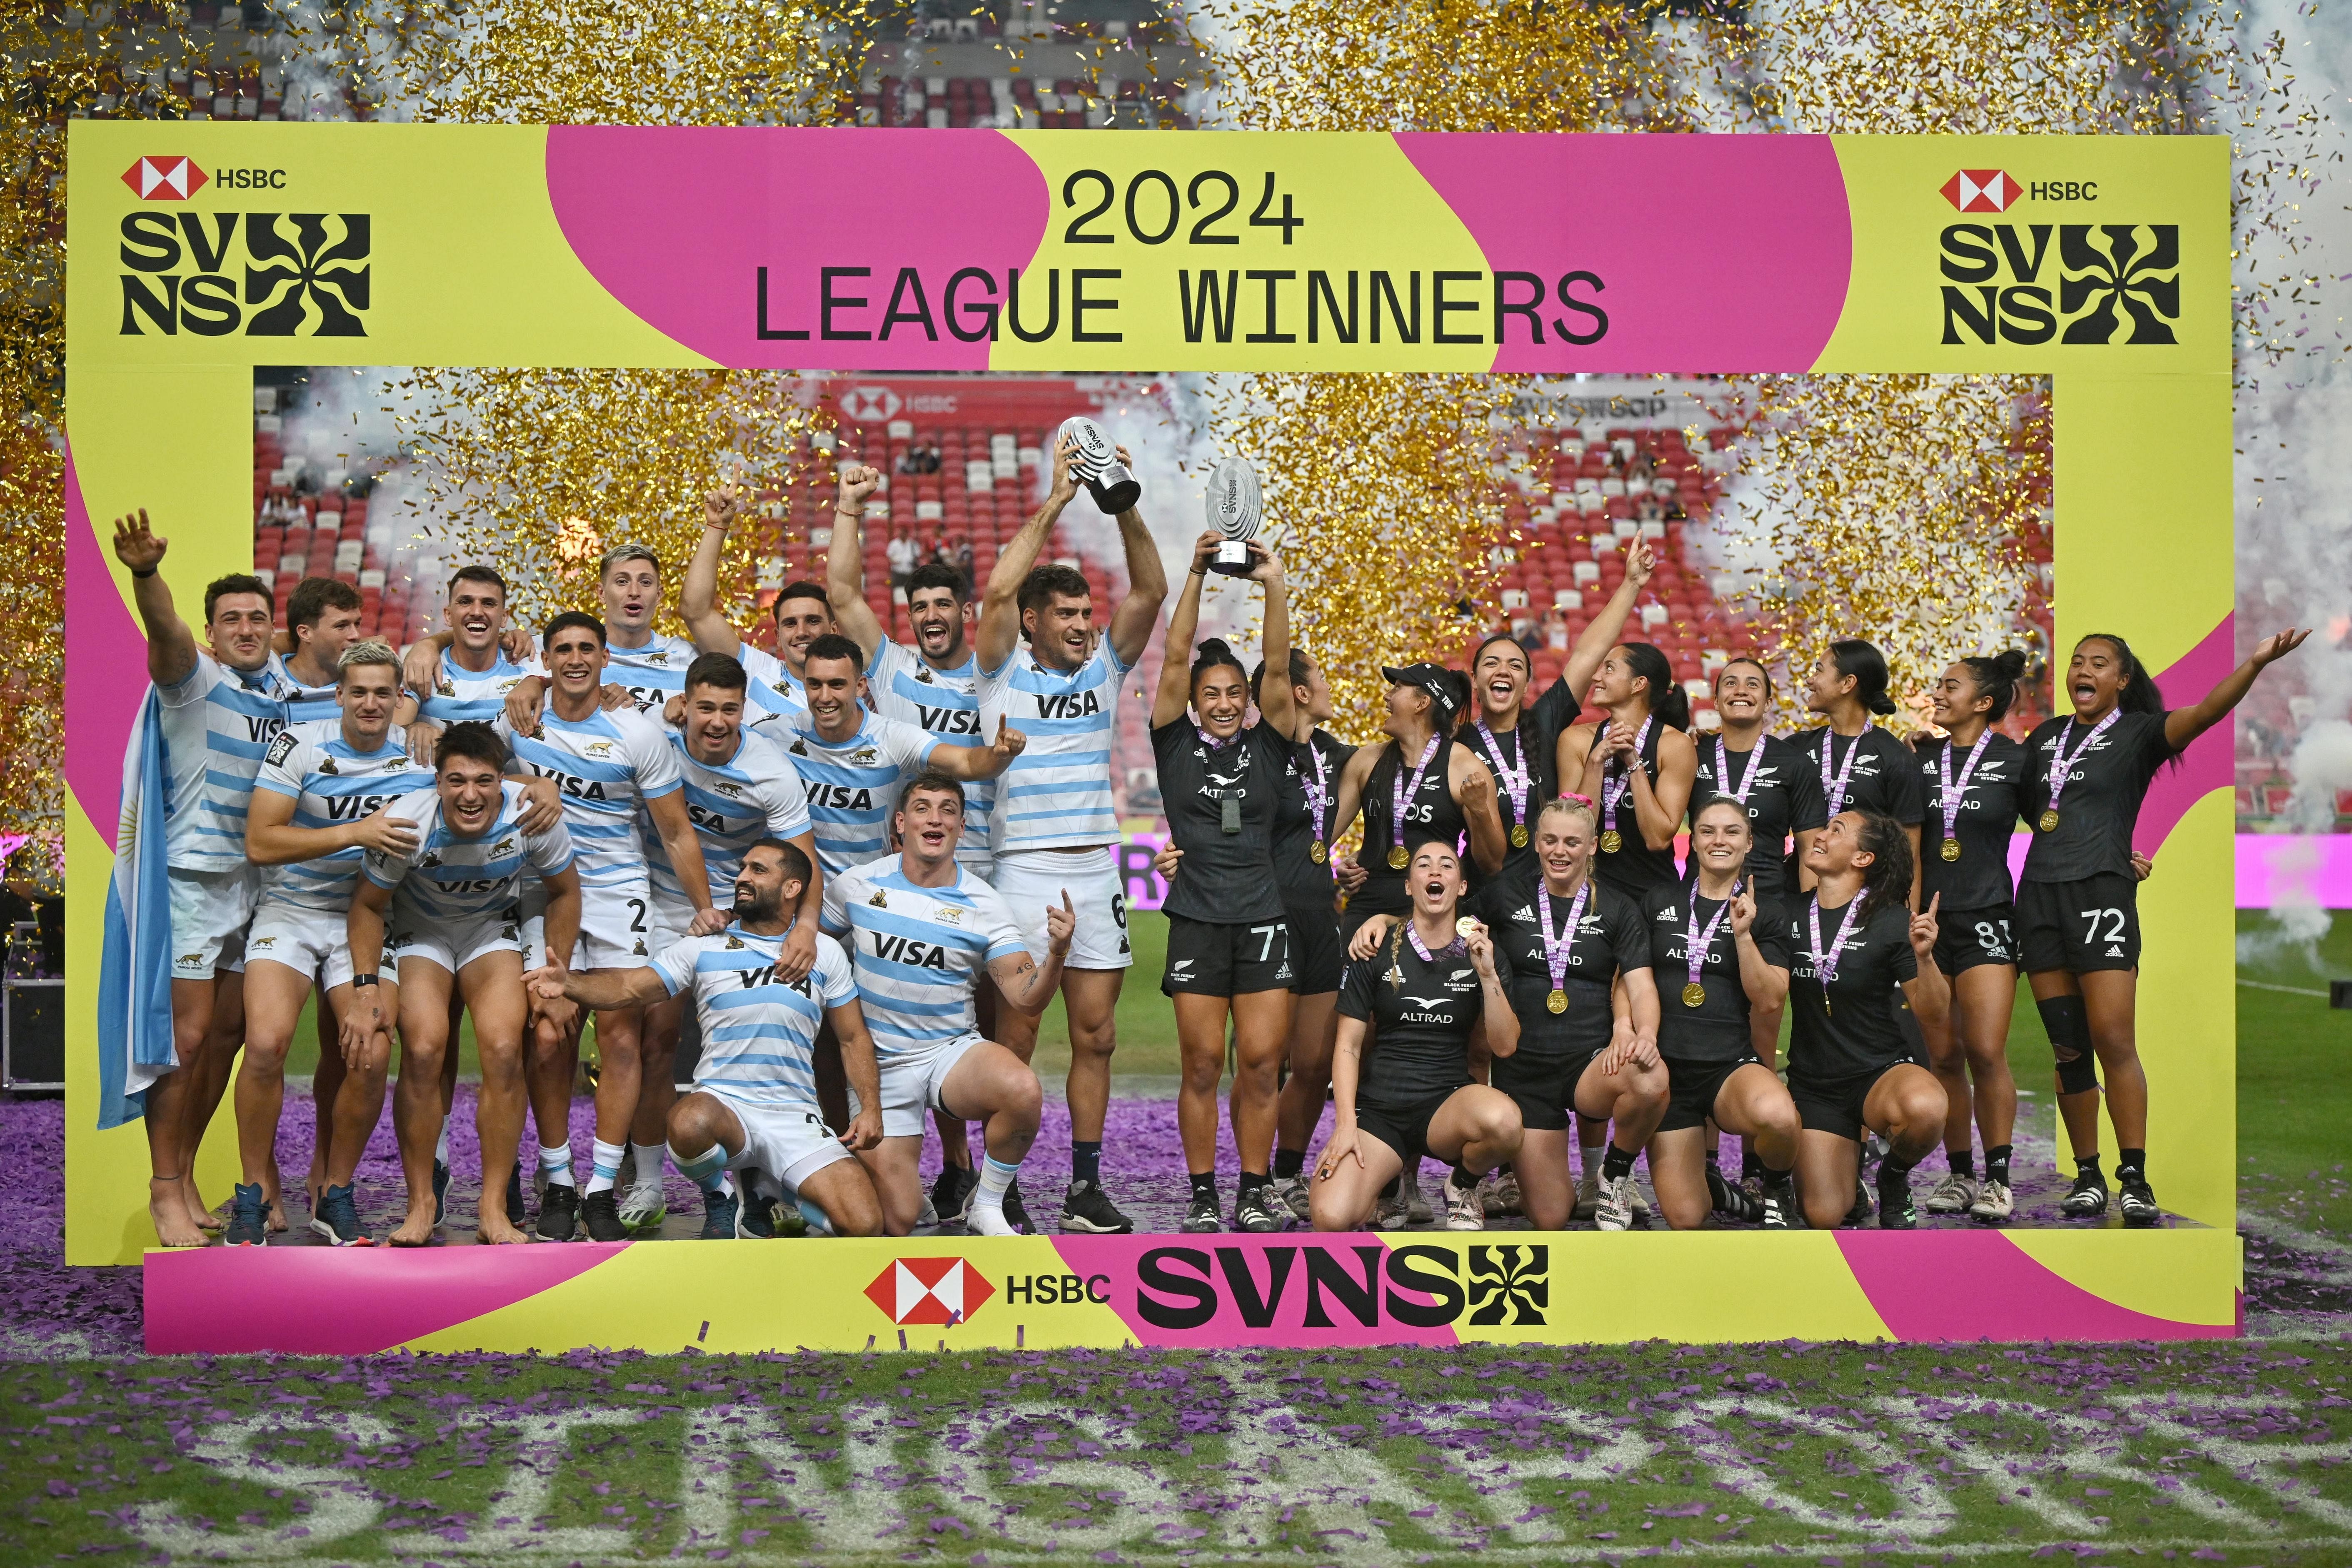 Argentina men’s team, New Zealand women claim HSBC SVNS league titles in Singapore